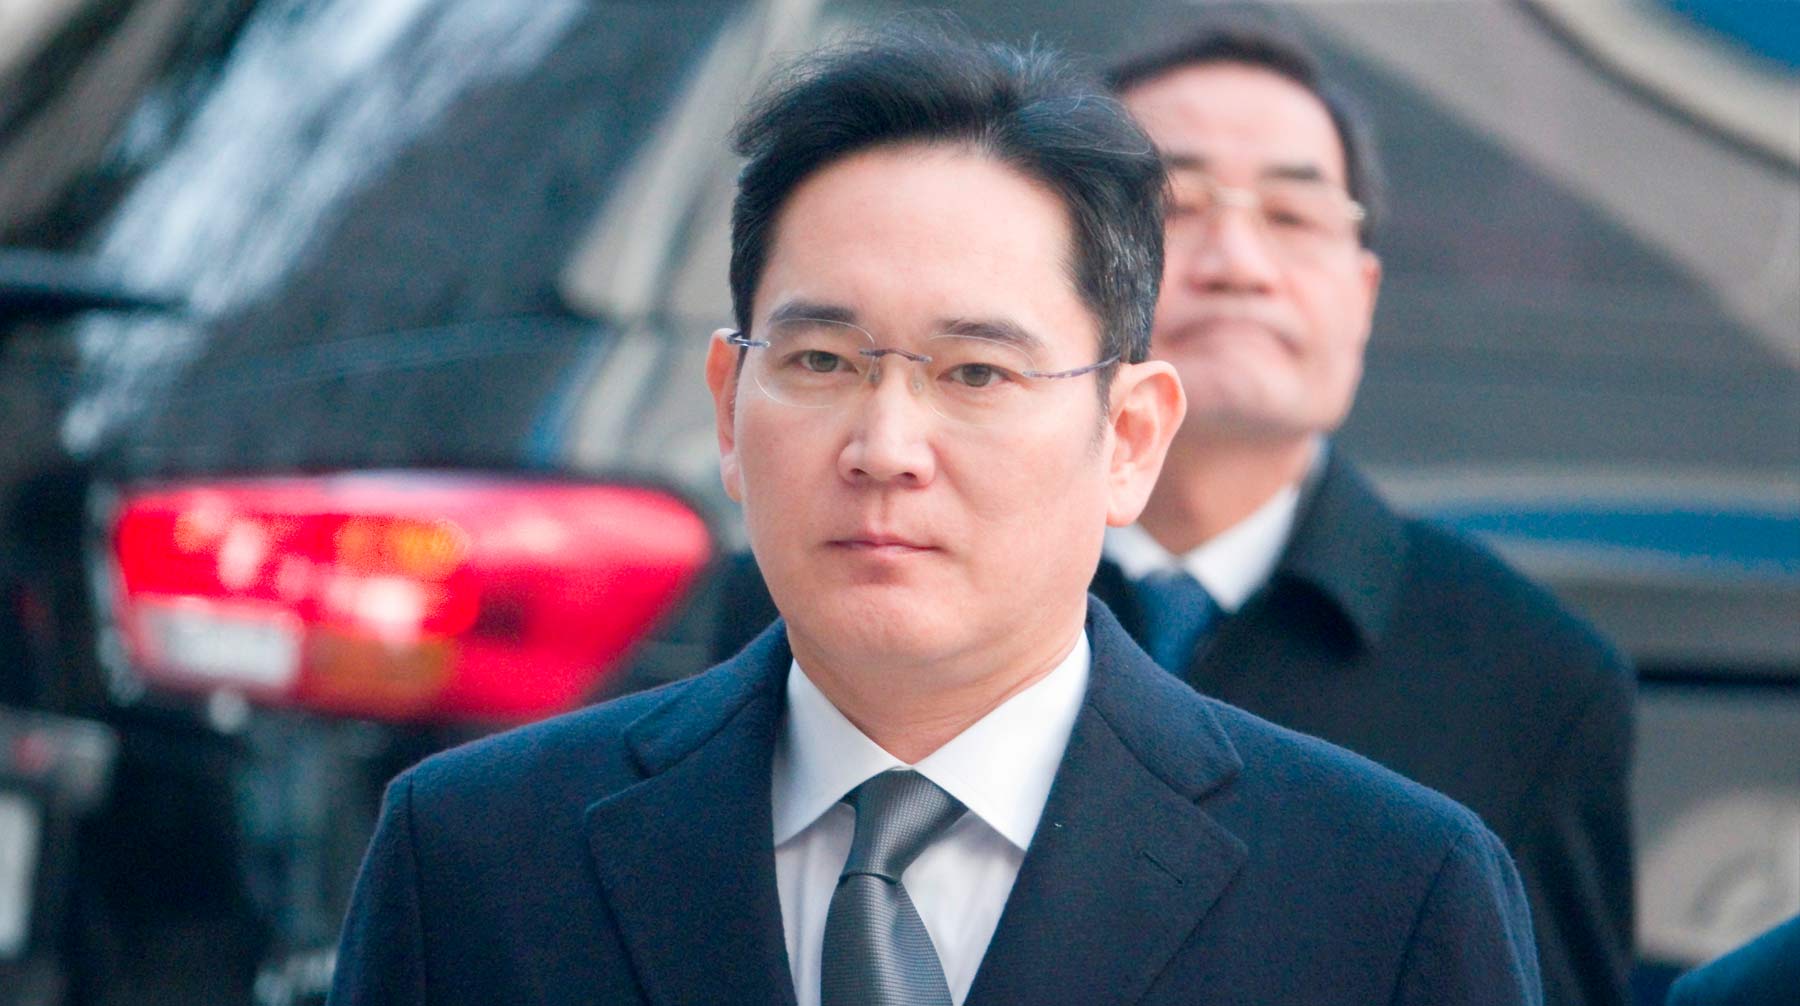 По версии следствия, он был причастен к подкупу подруги экс-президента Южной Кореи Вице-президента Samsung Electronics Ли Чжэ Ен